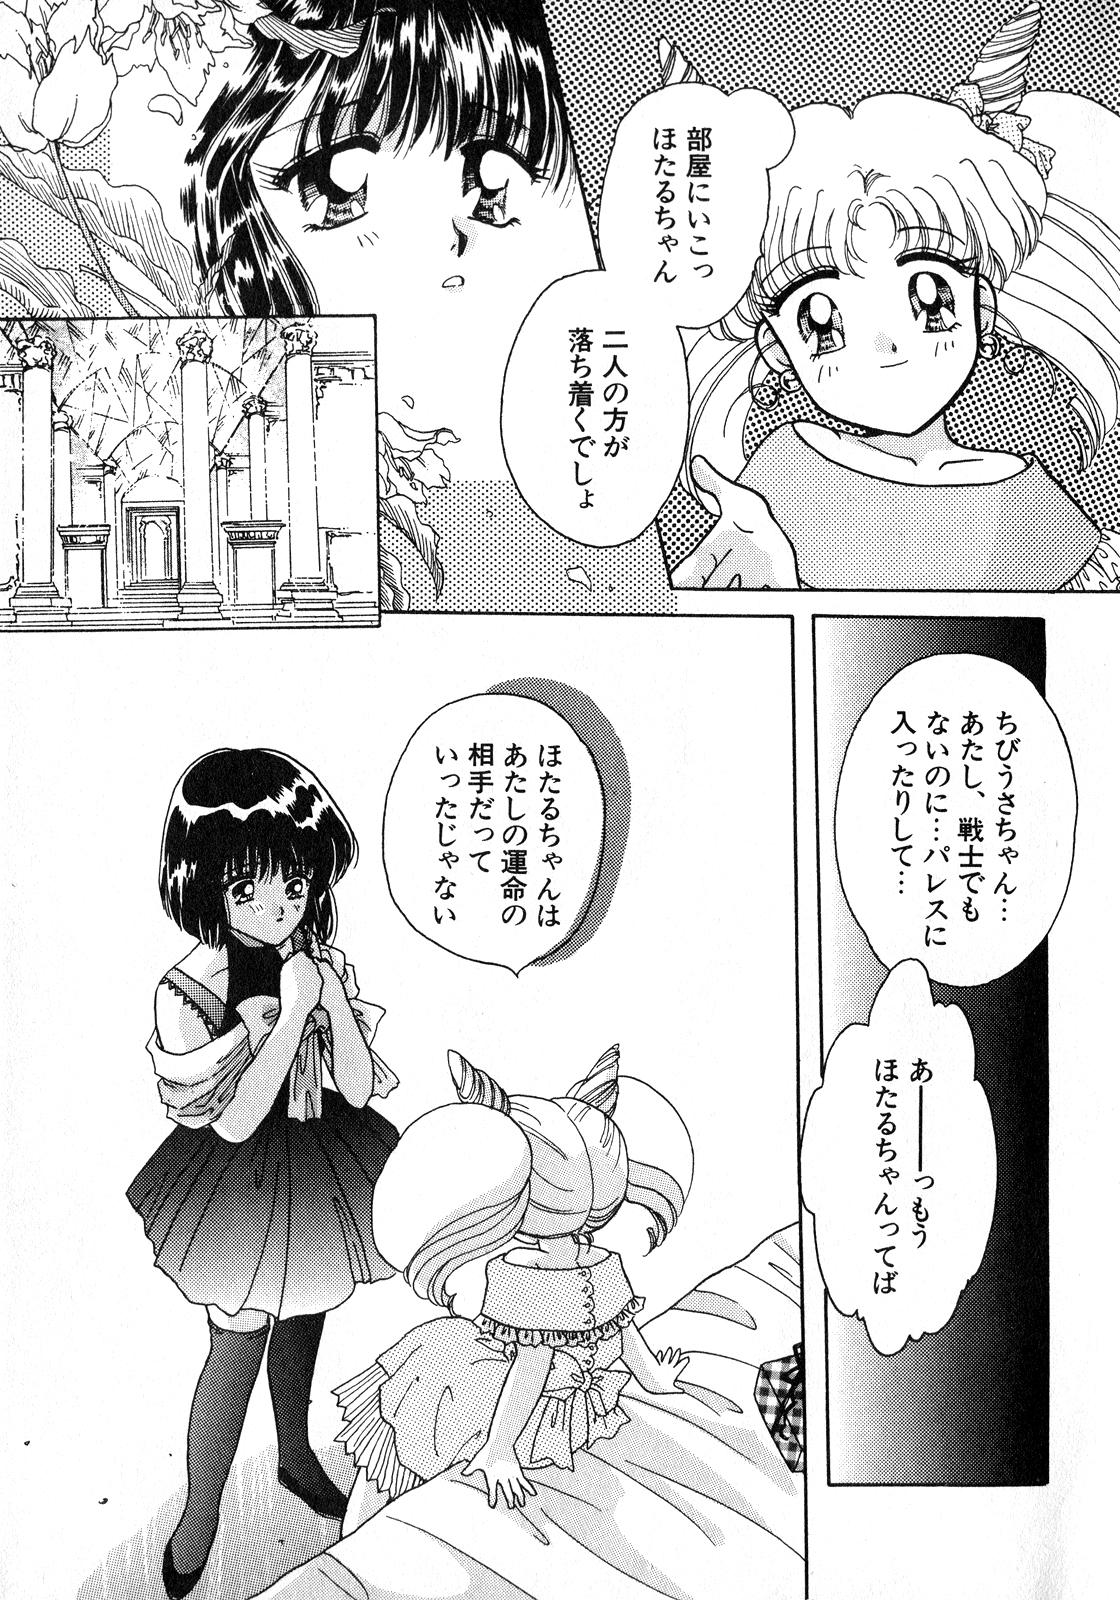 Bisexual Lunatic Party 8 - Sailor moon Coroa - Page 6